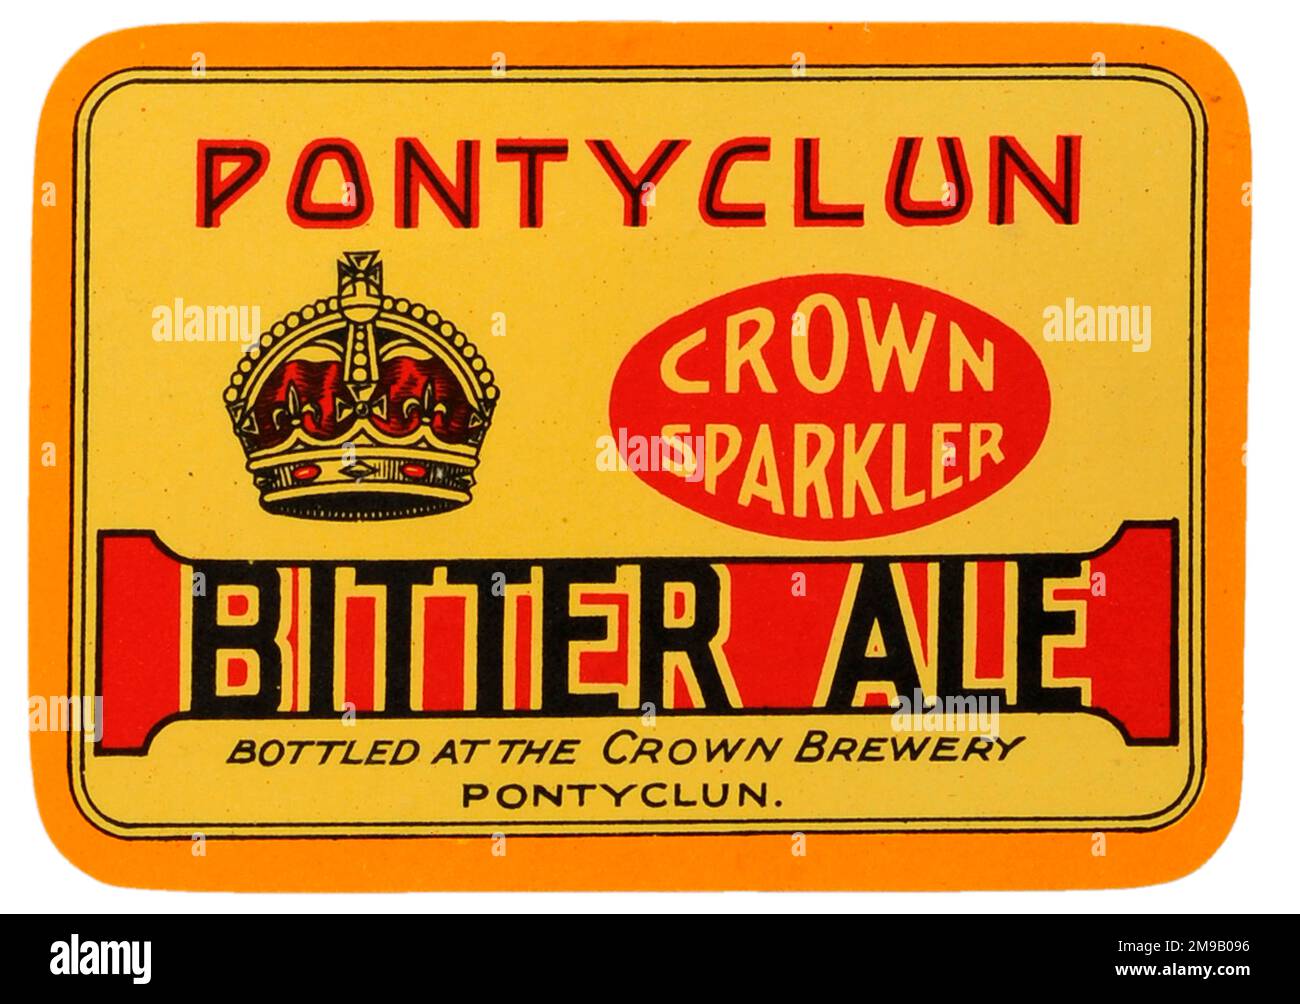 Crown Brewery Crown Sparkler Bitter Ale Stockfoto